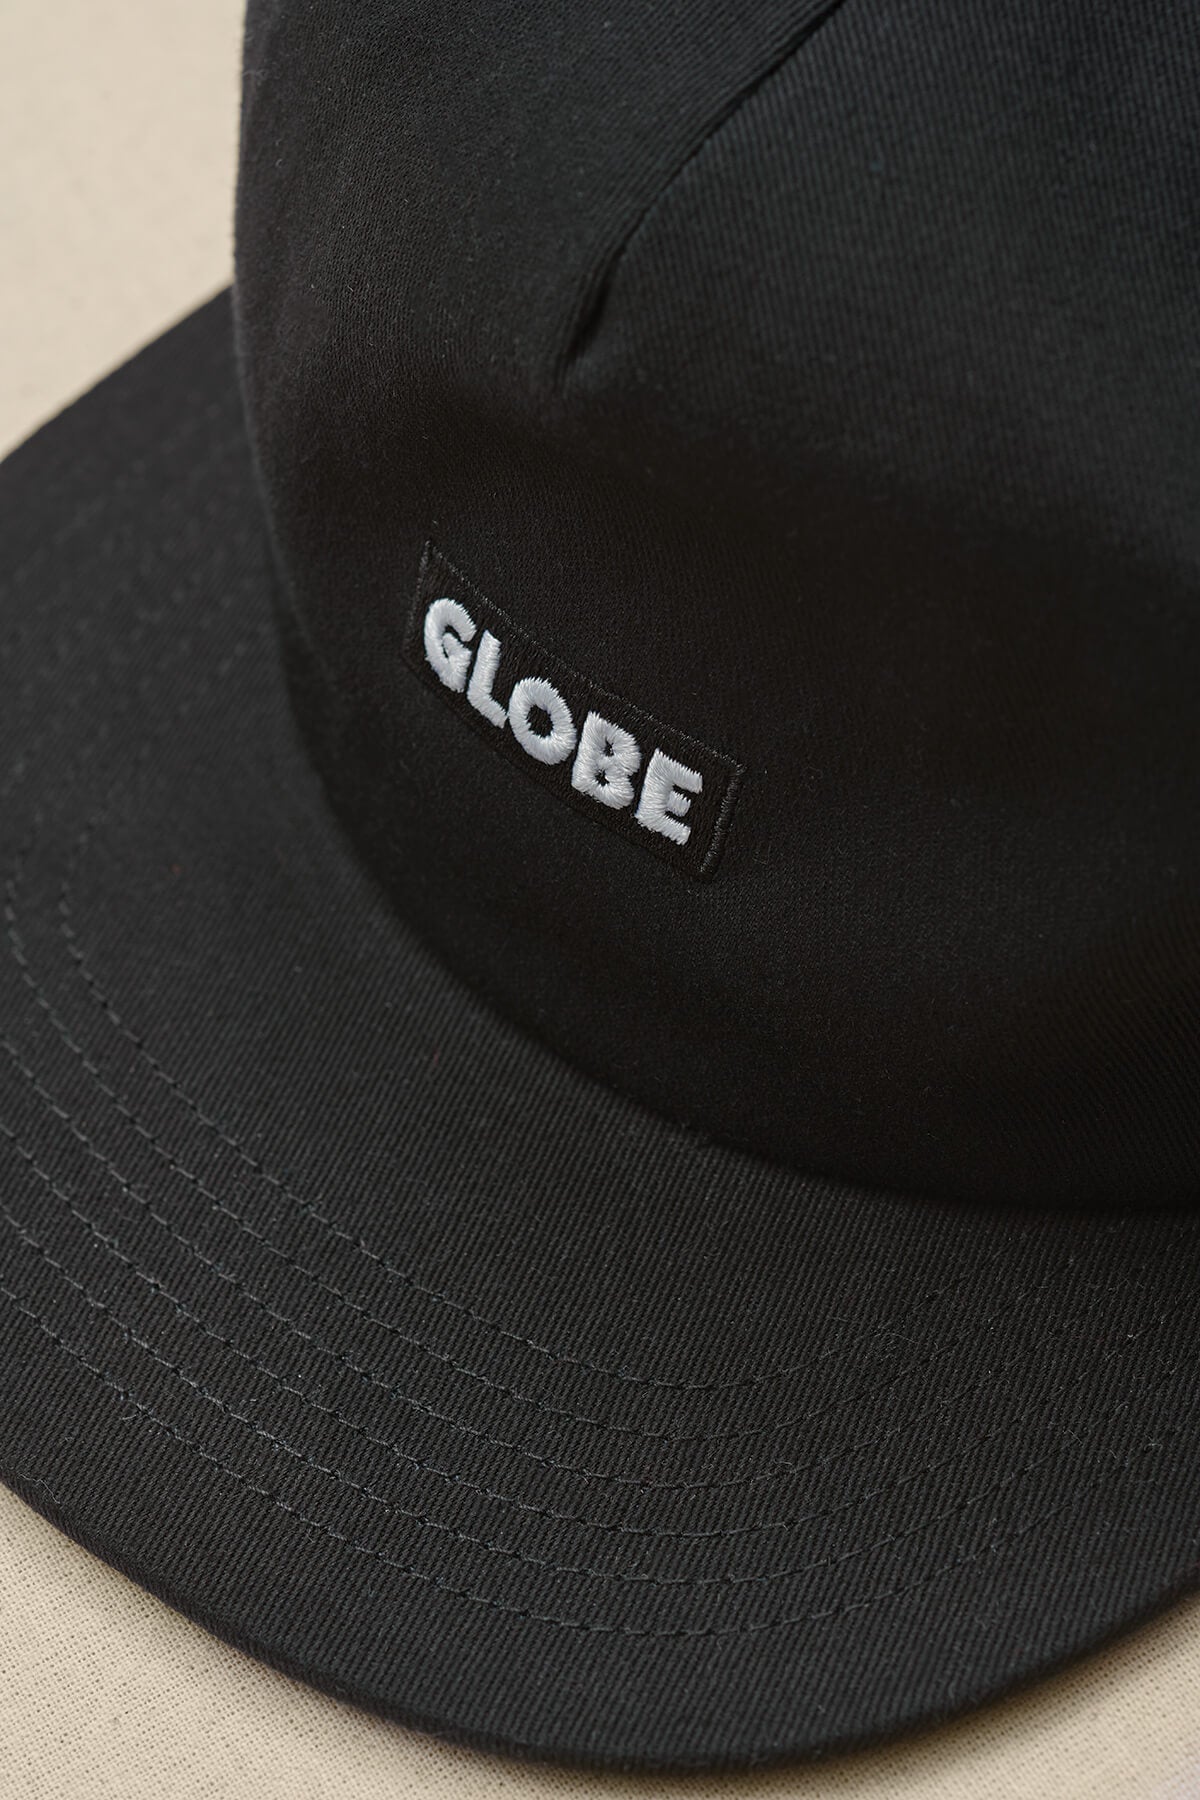 Globe CAPS LV Cap in Washed Black